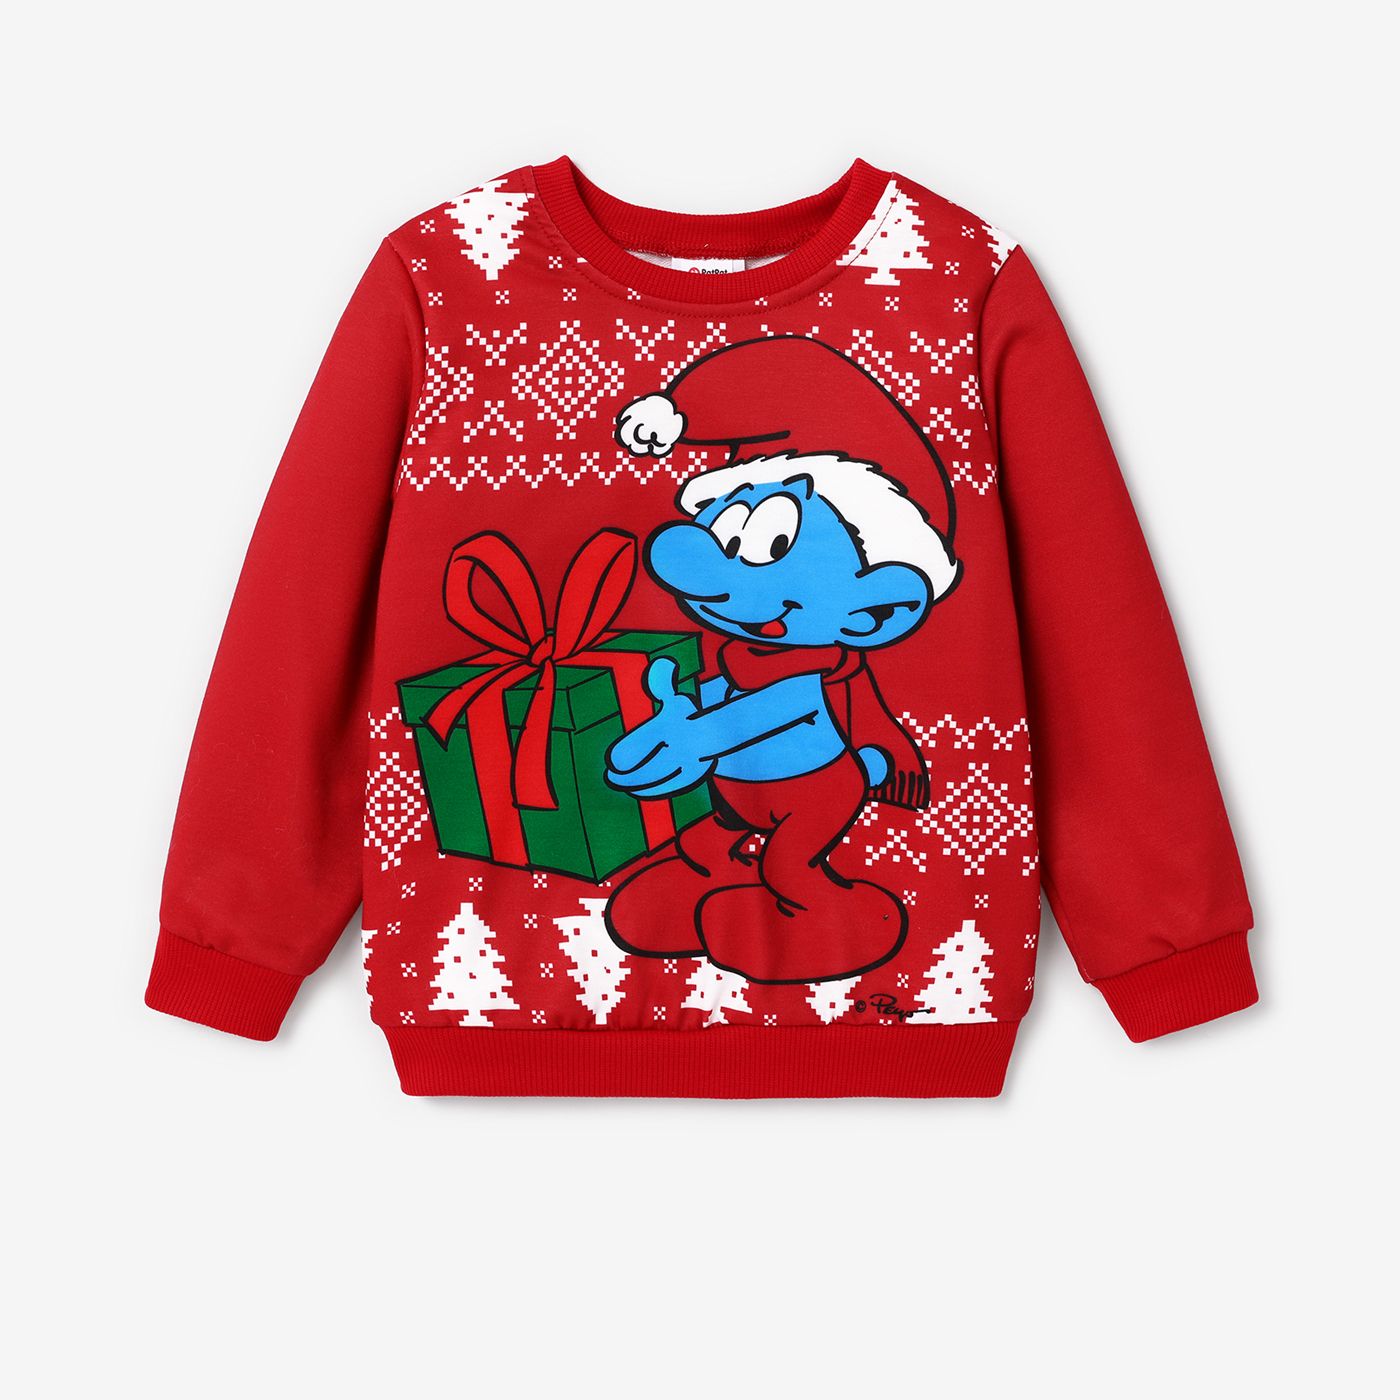 The Smurfs Family Matching Christmas Character & Snowflake Print Long-sleeve Top